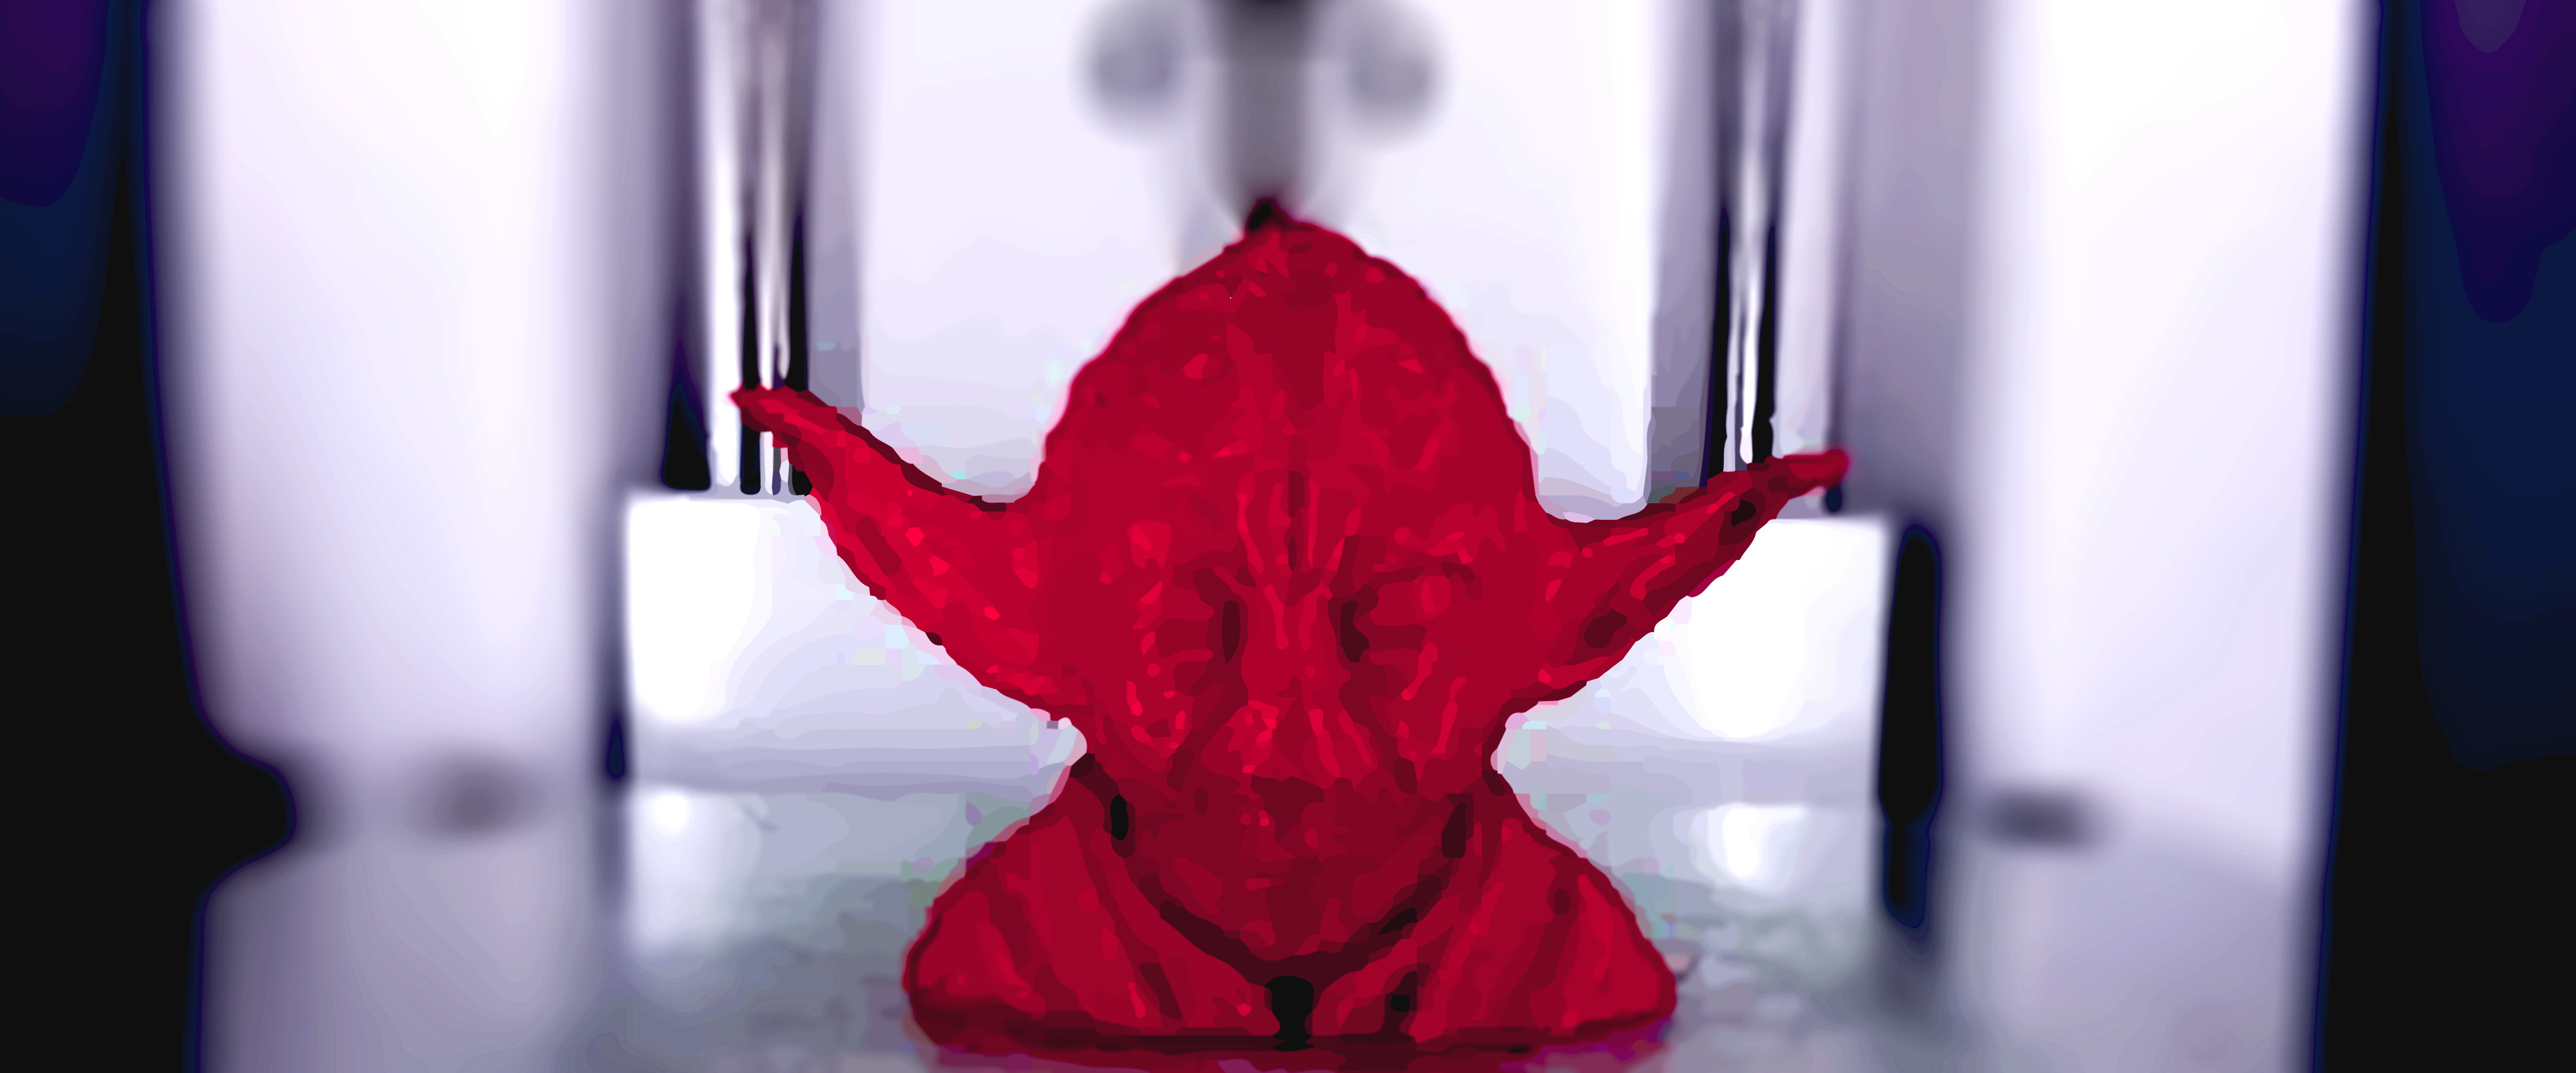 Impresión 3D: Crea tu "Cubo de Compañía" 2